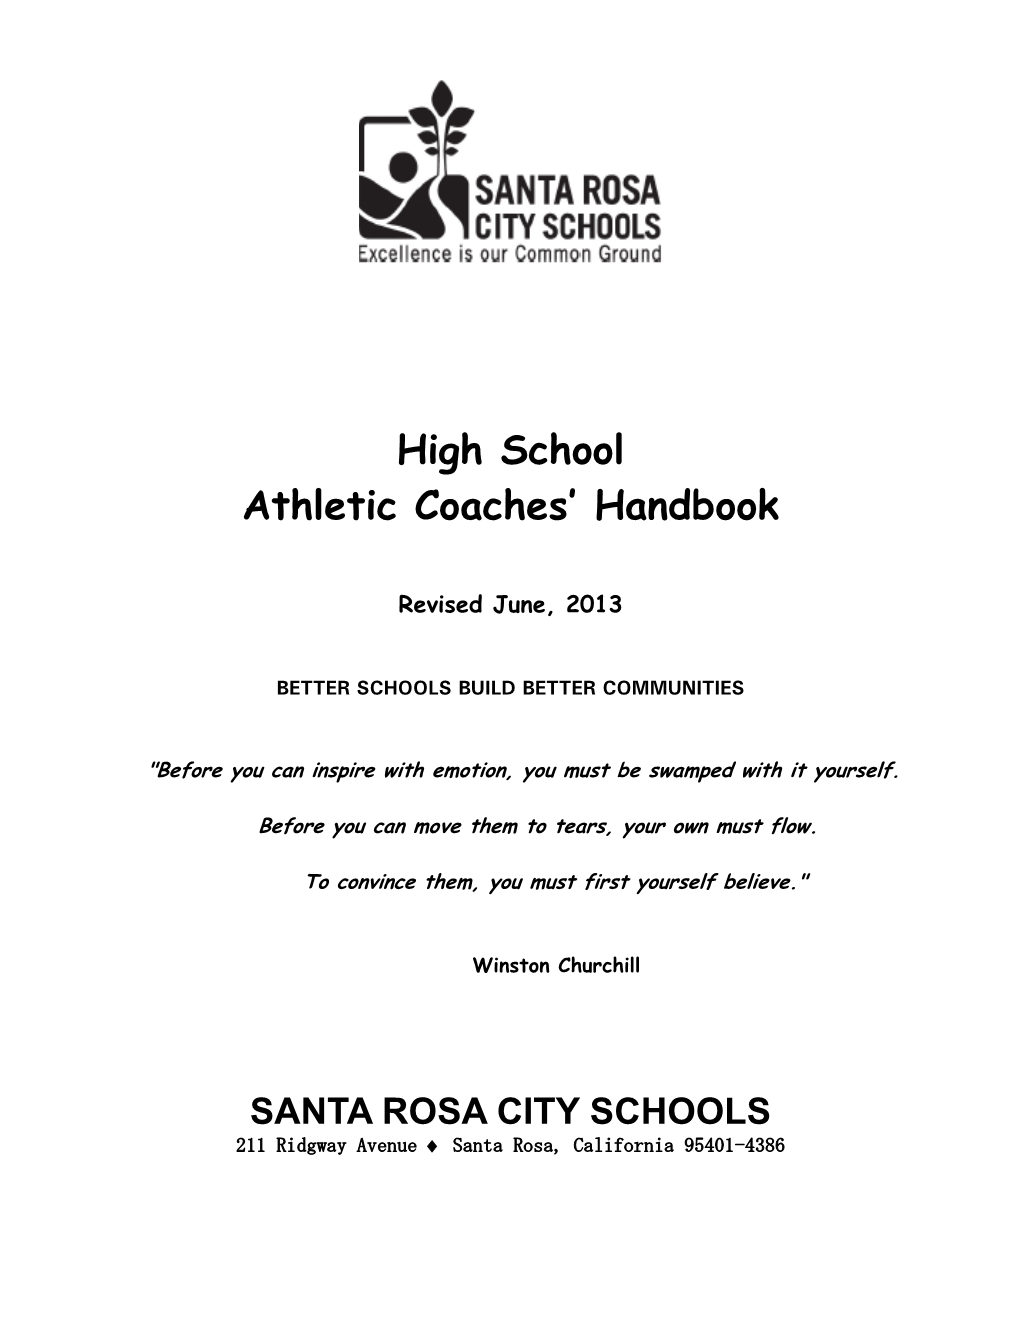 High School Athletic Coaches' Handbook